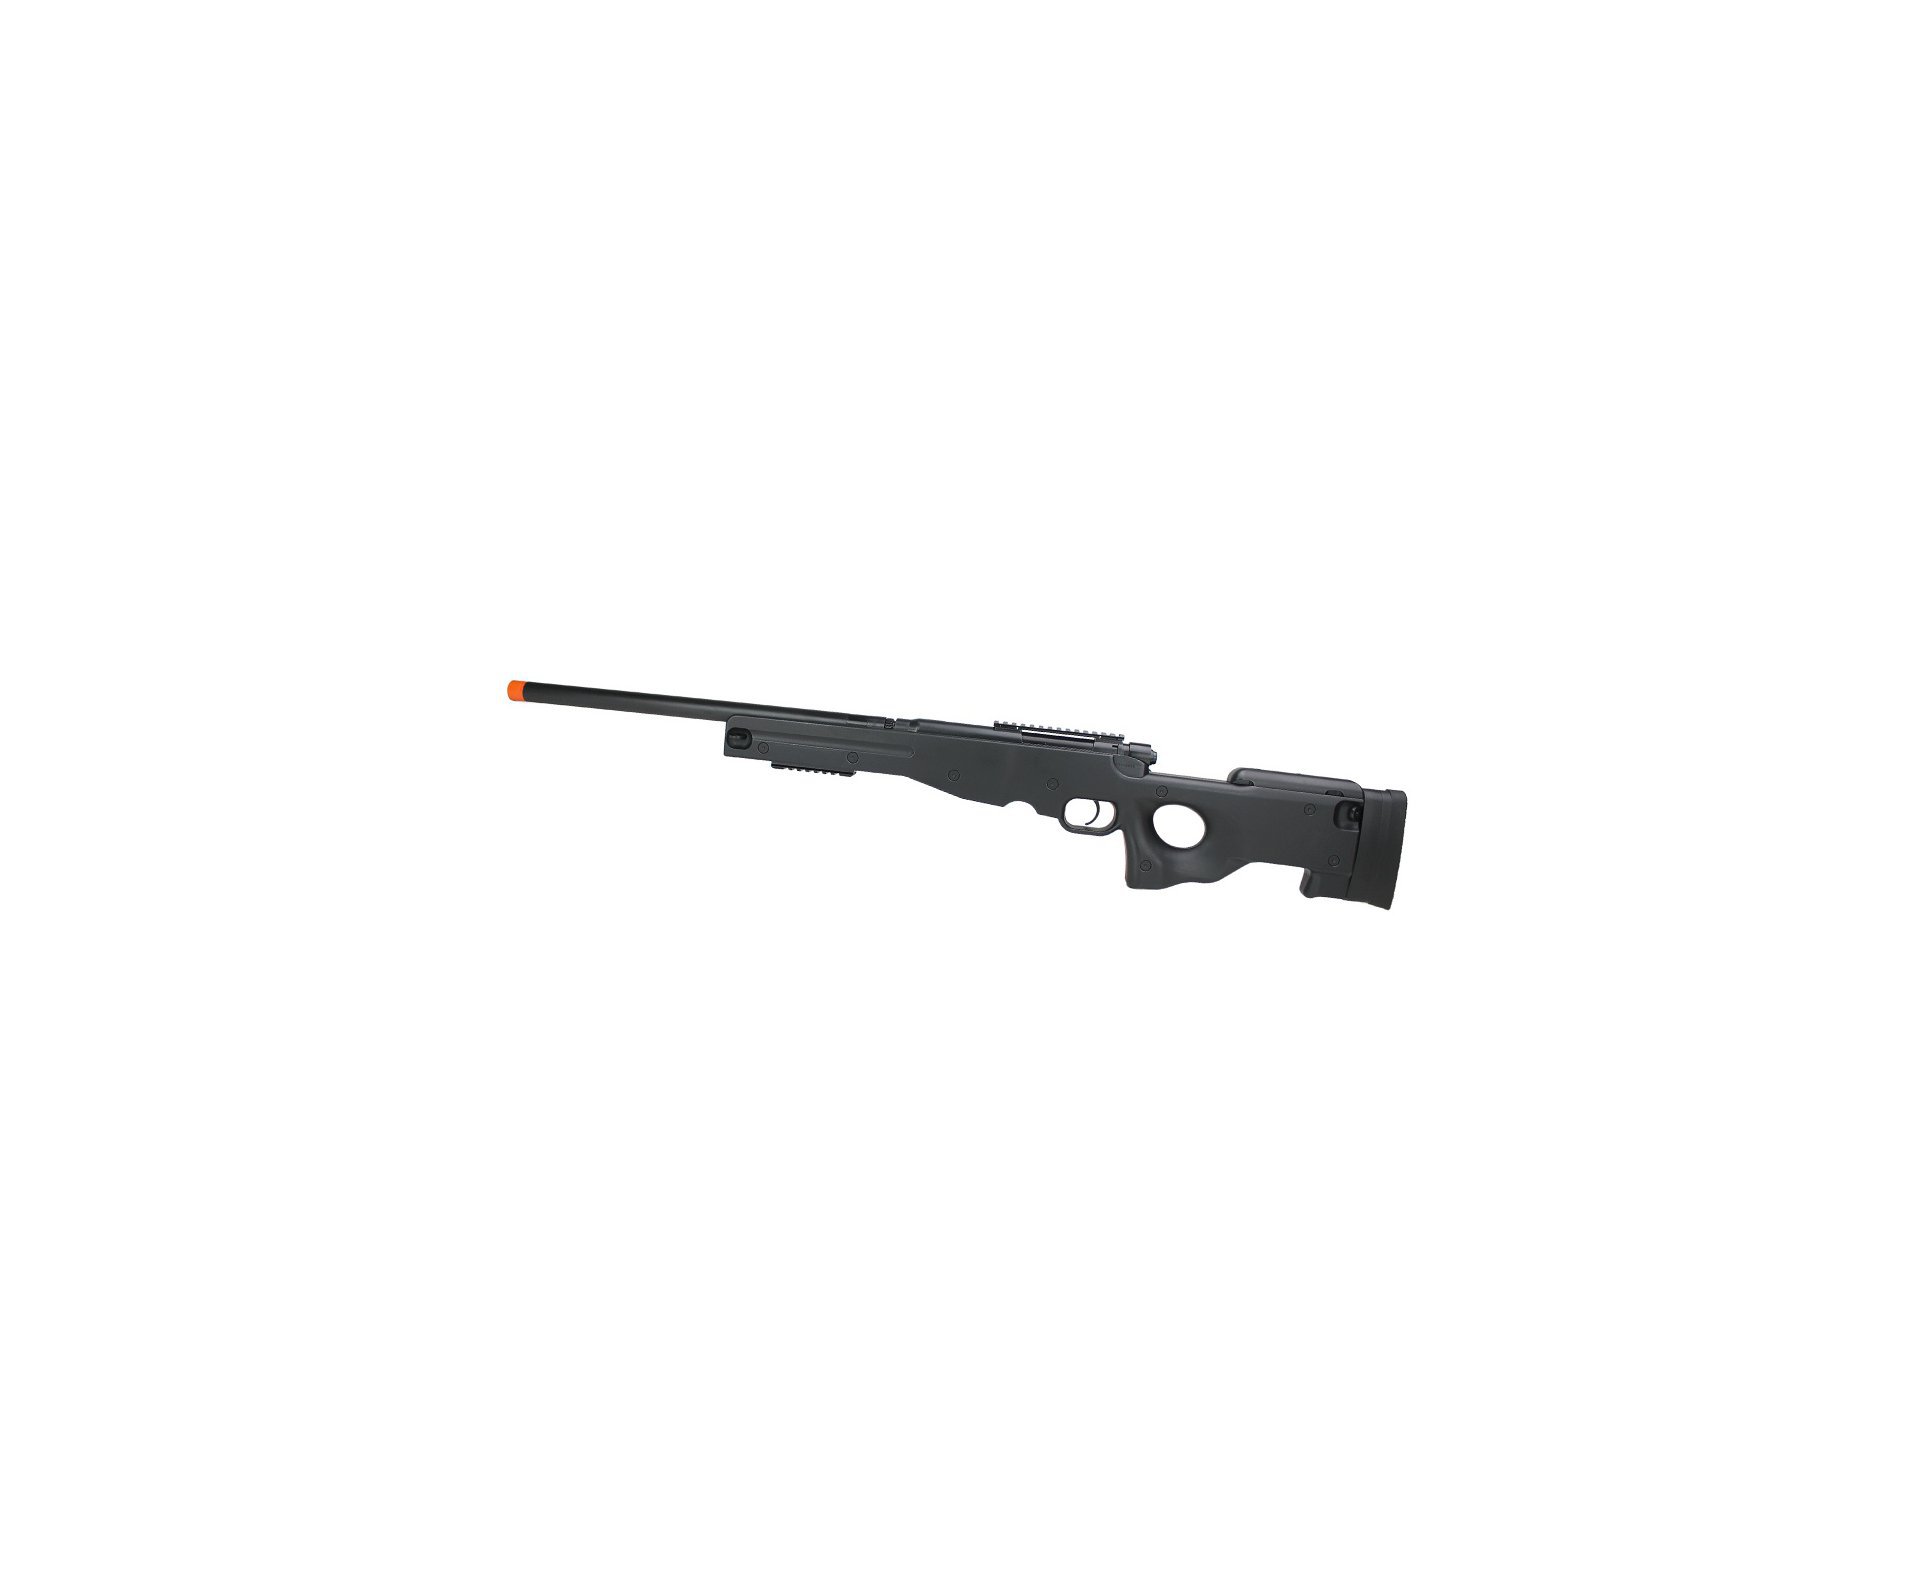 Artefato de Airsoft UA-317B - Tatical Sniper 6,0mm